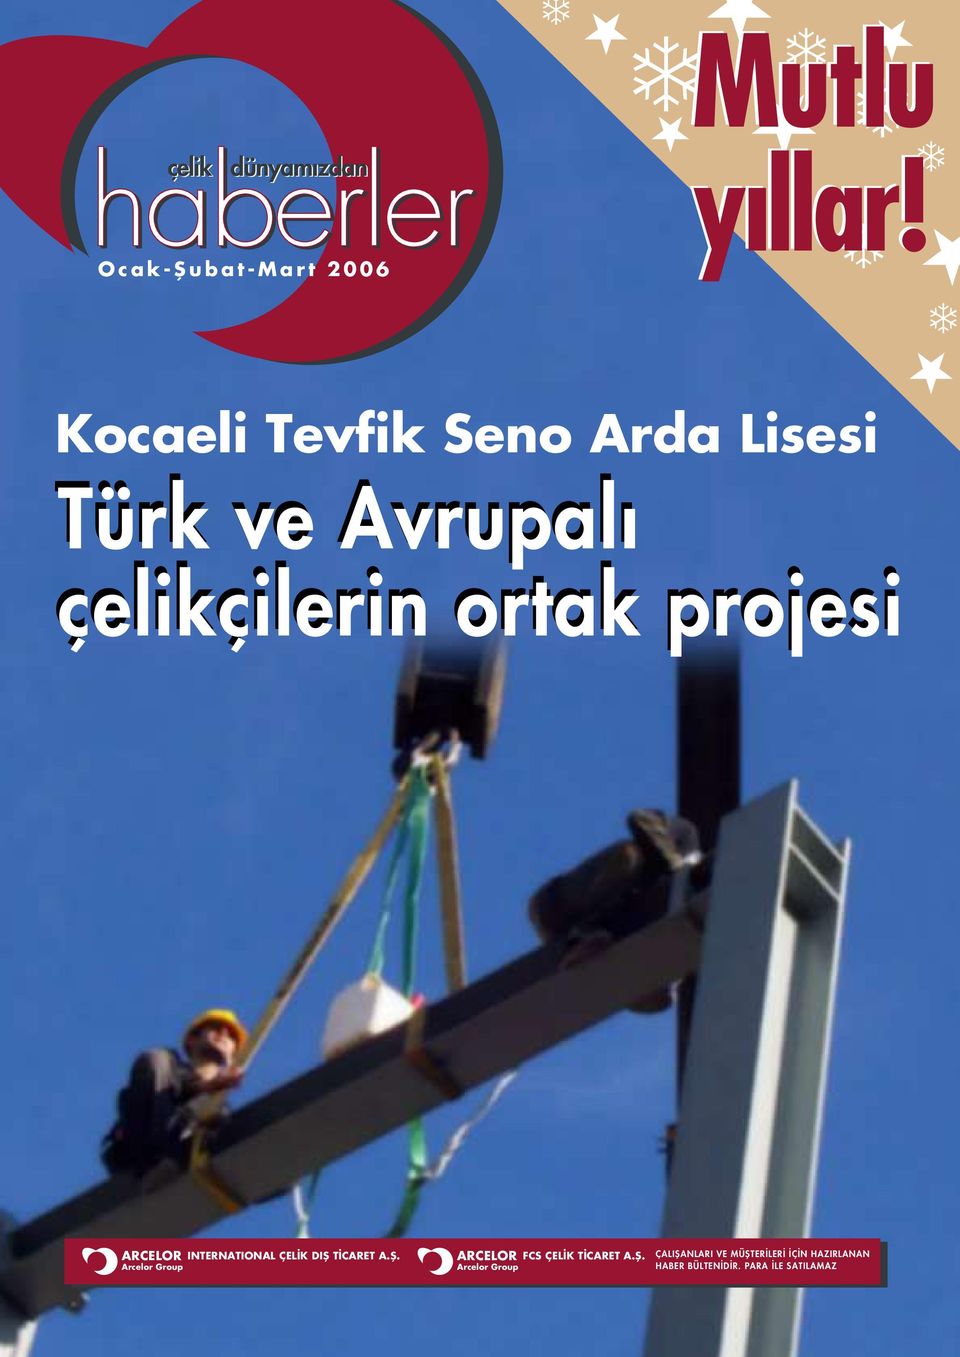 ARCELOR INTERNATIONAL ÇEL K DIfi T CARET A.fi. Arcelor Group ARCELOR FCS ÇEL K T CARET A.